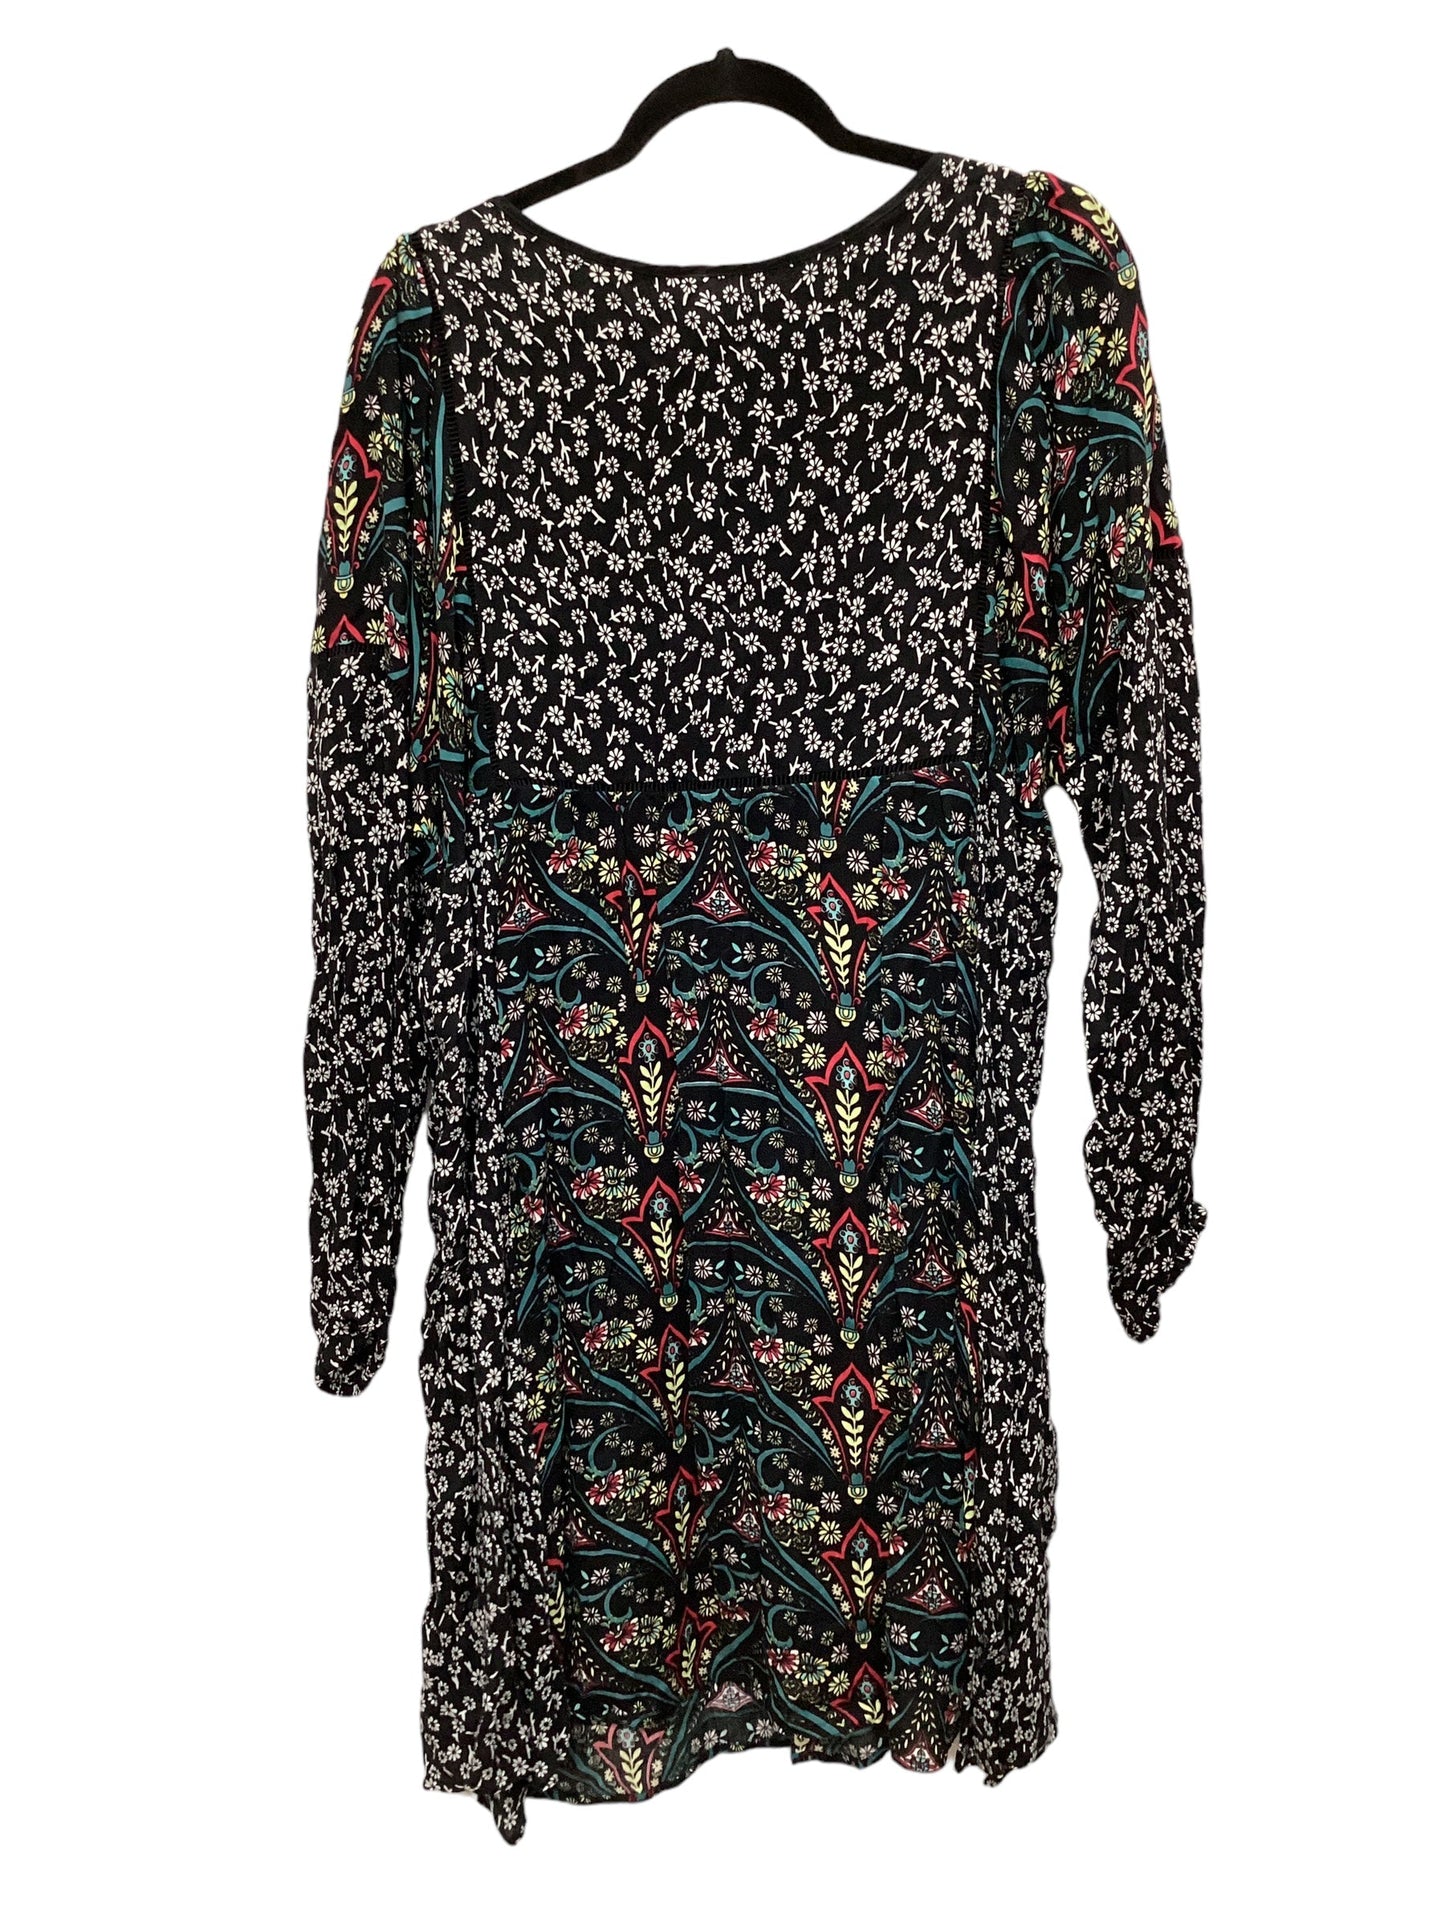 Dress Casual Midi By Sundance  Size: Xl